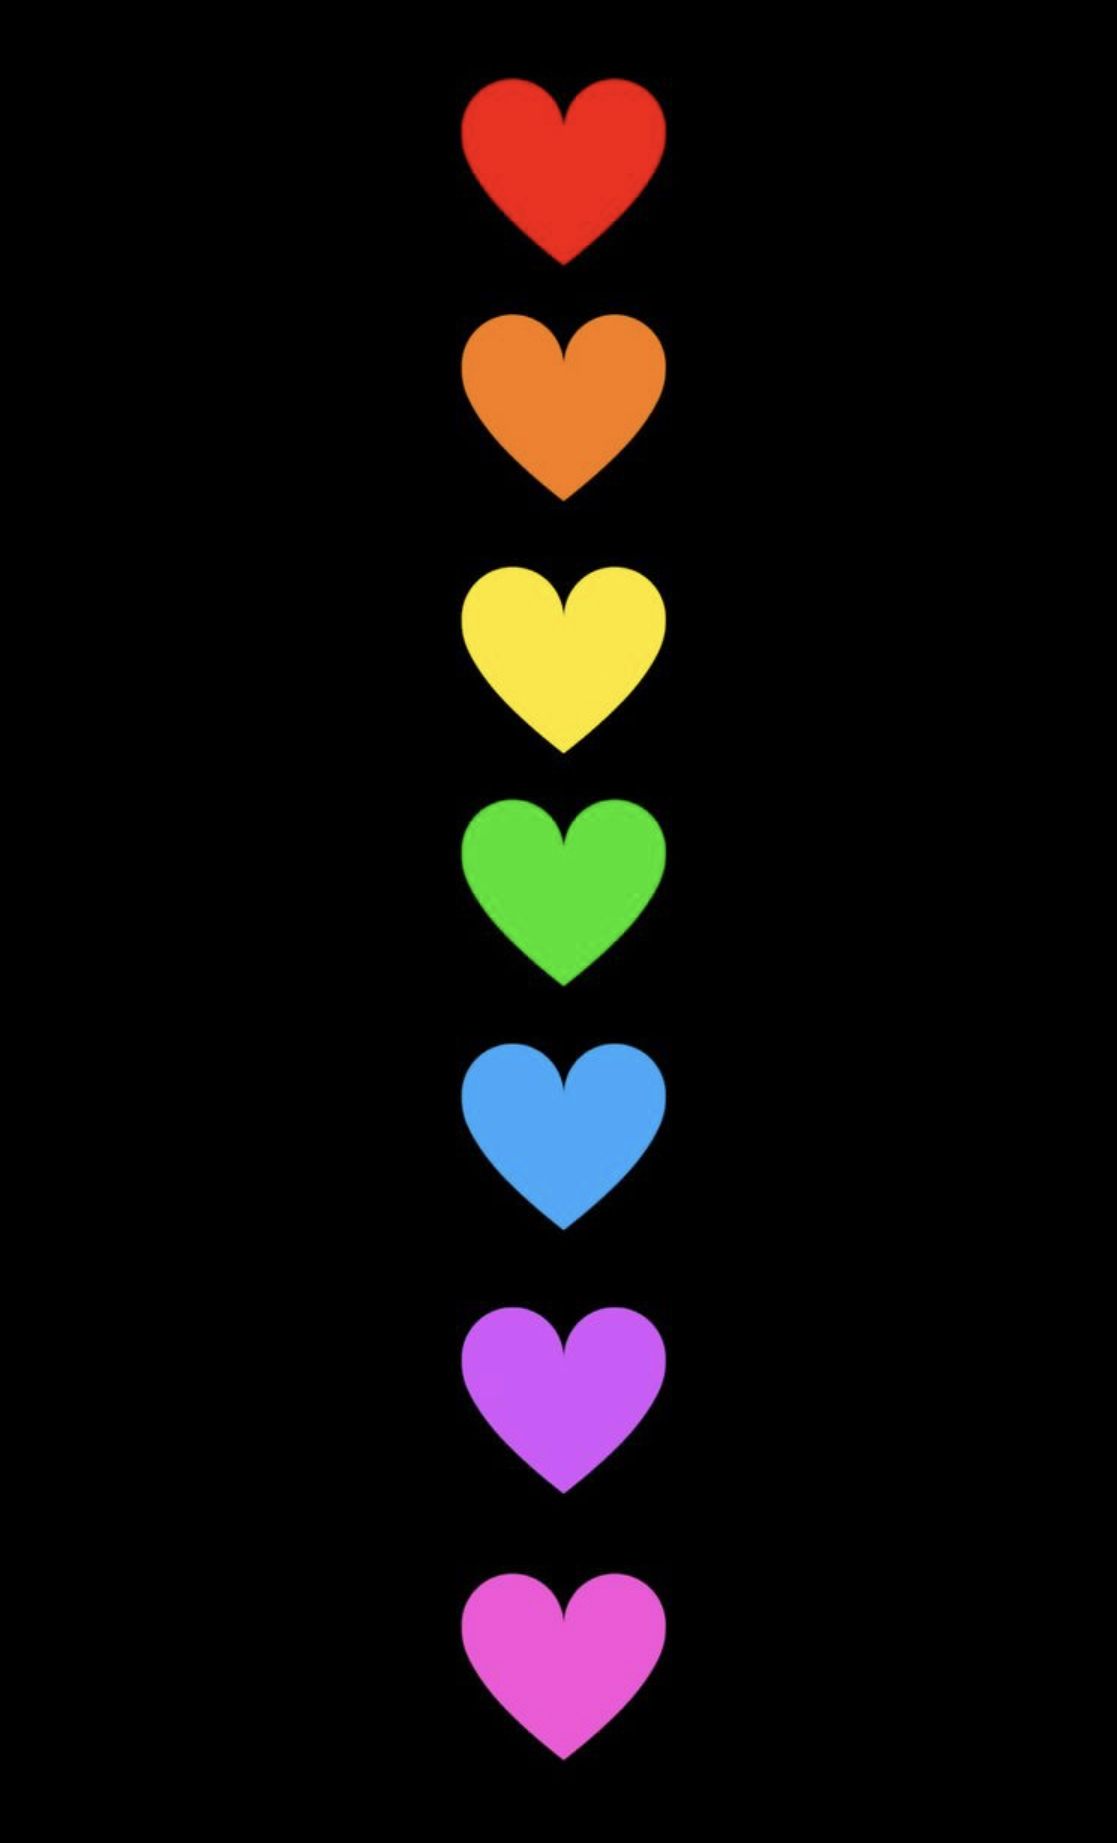 Hearts. Heart wallpaper, Rainbow wallpaper, Colorful heart